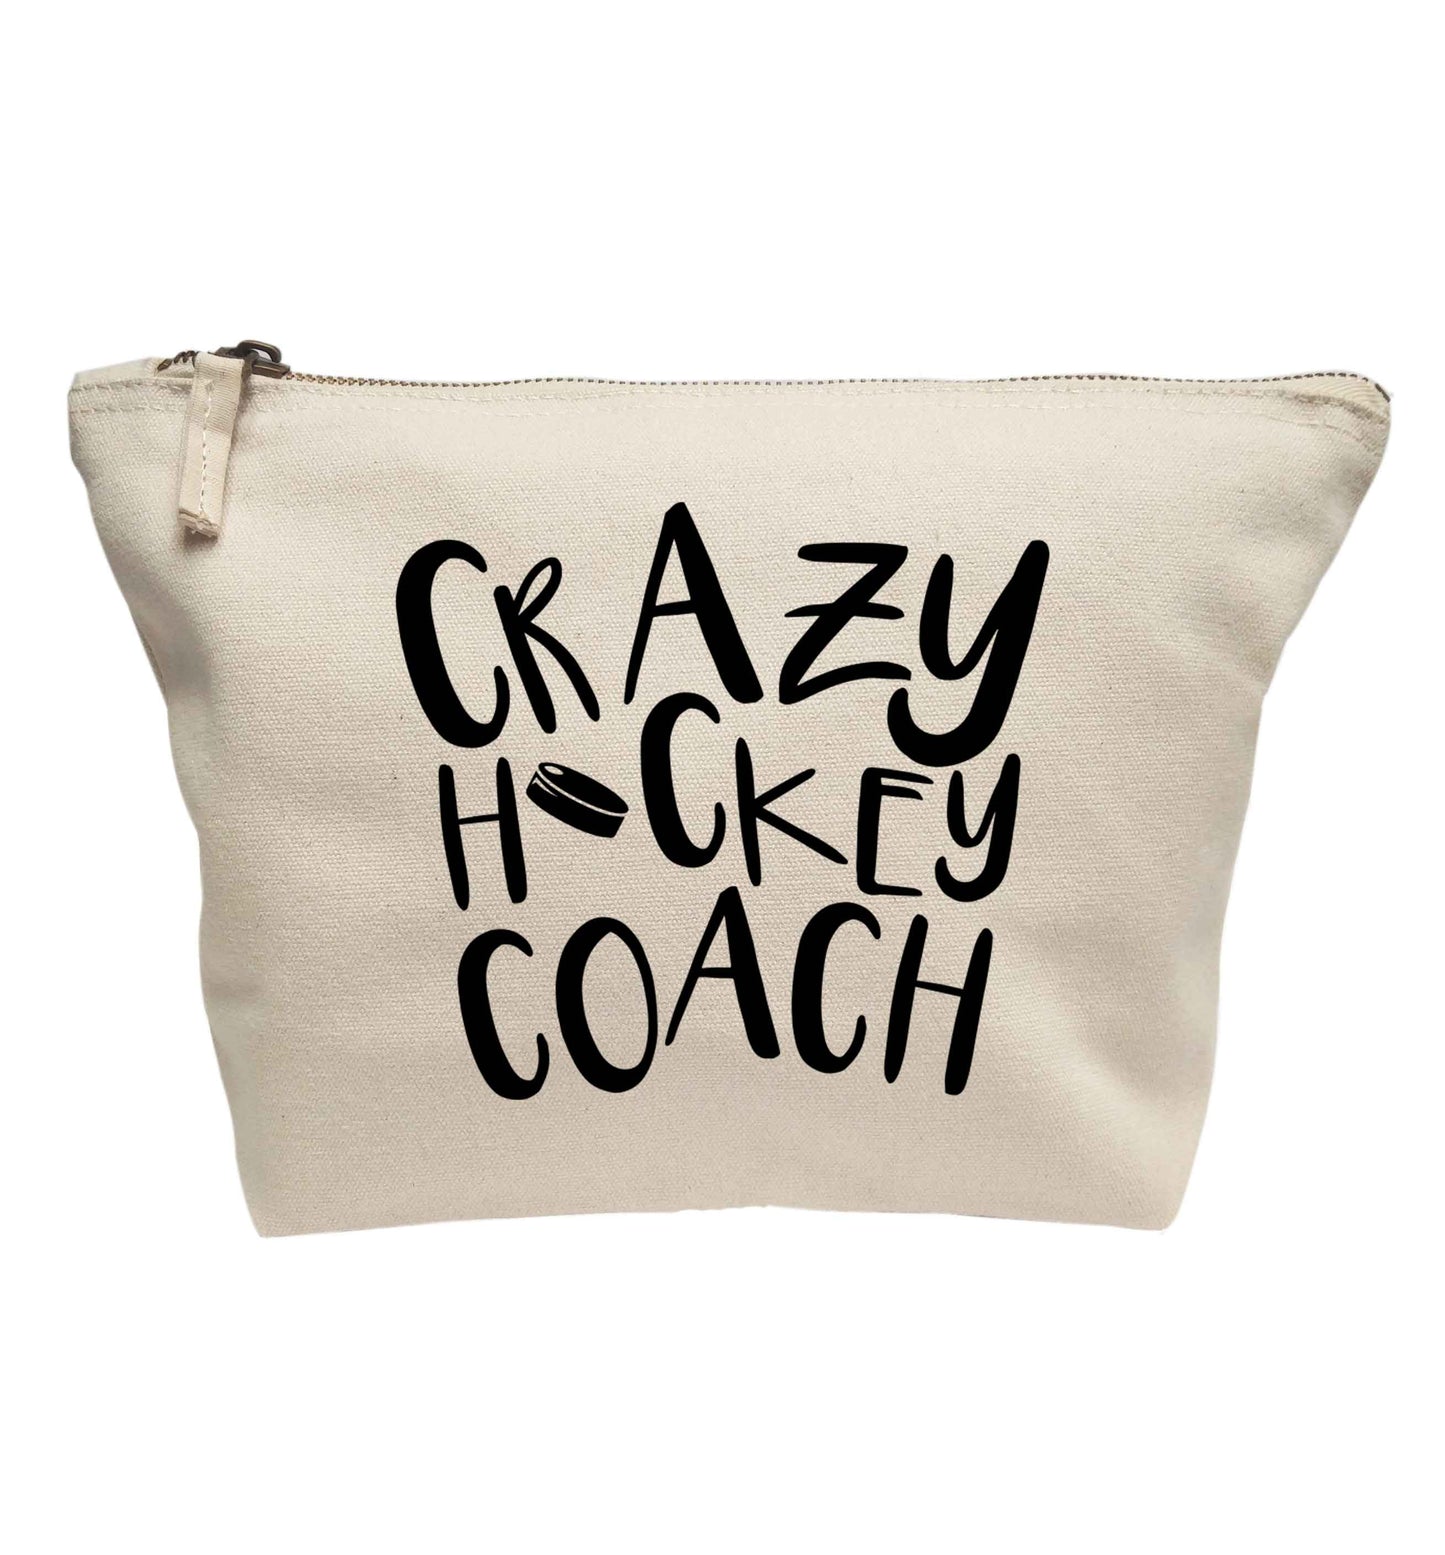 Crazy hockey coach | makeup / wash bag